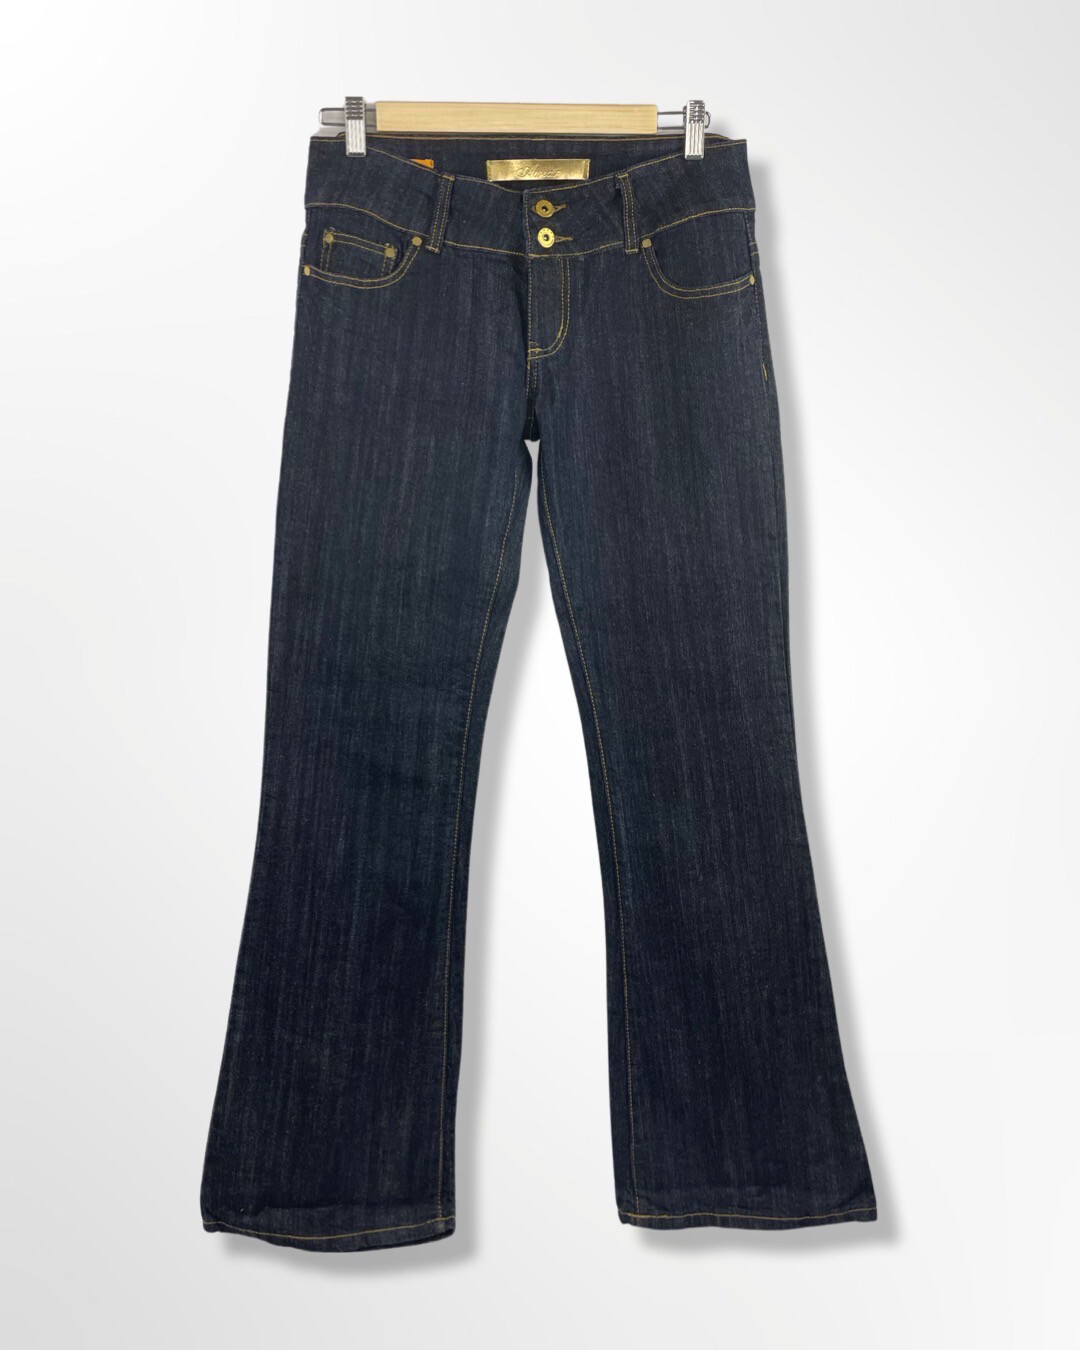 A-Wear Bootcut Jeans Size 10